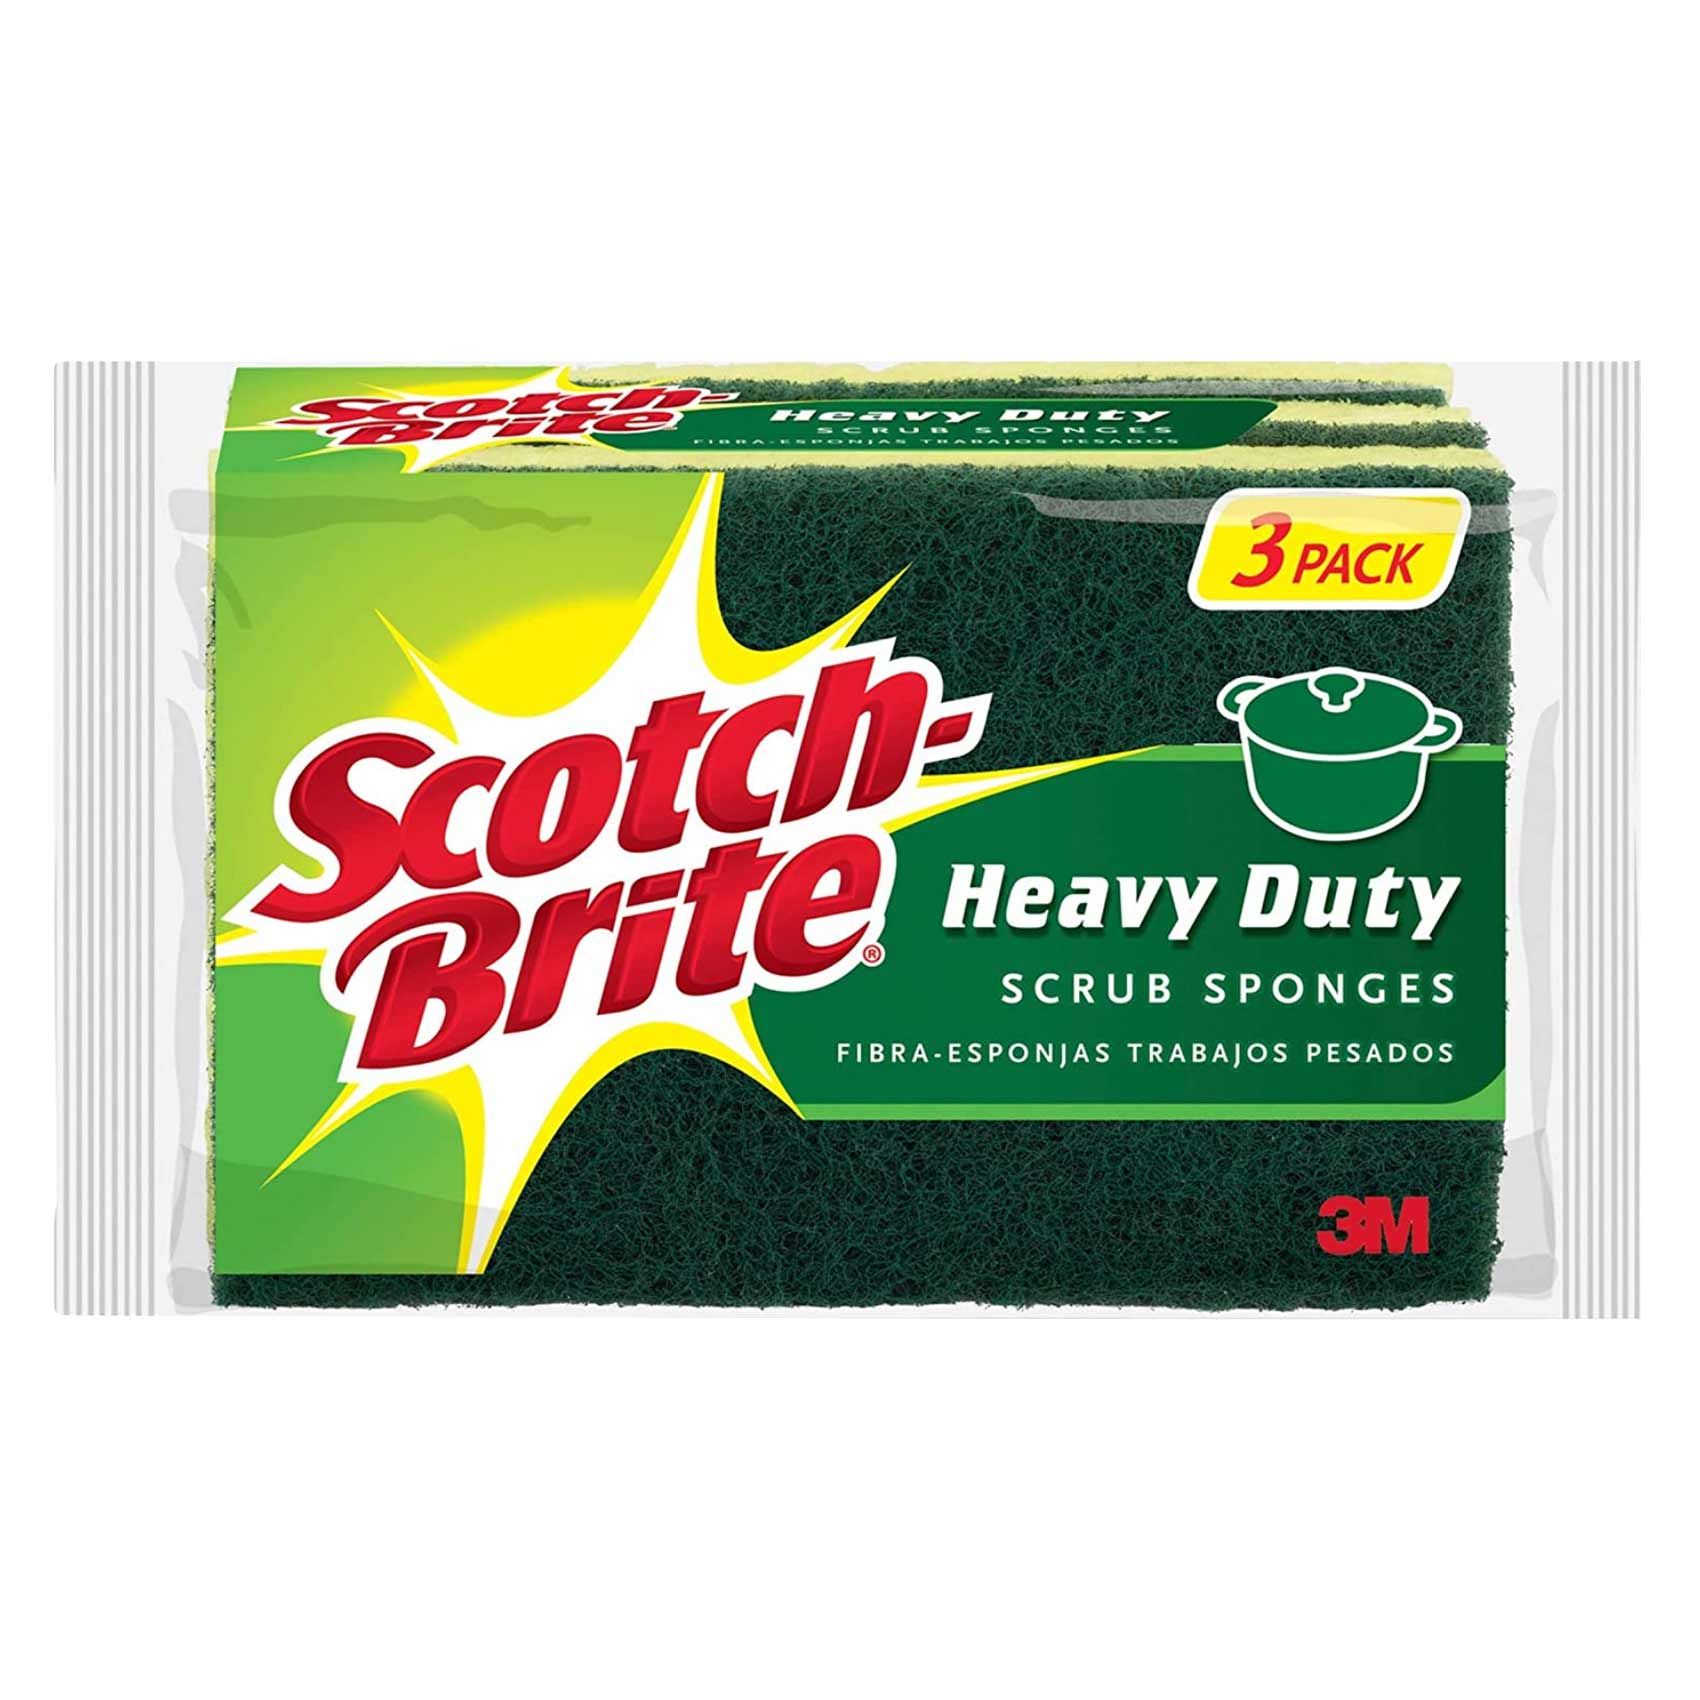 Scotch Brite Heavy Duty Scrub Sponges 3Pcs